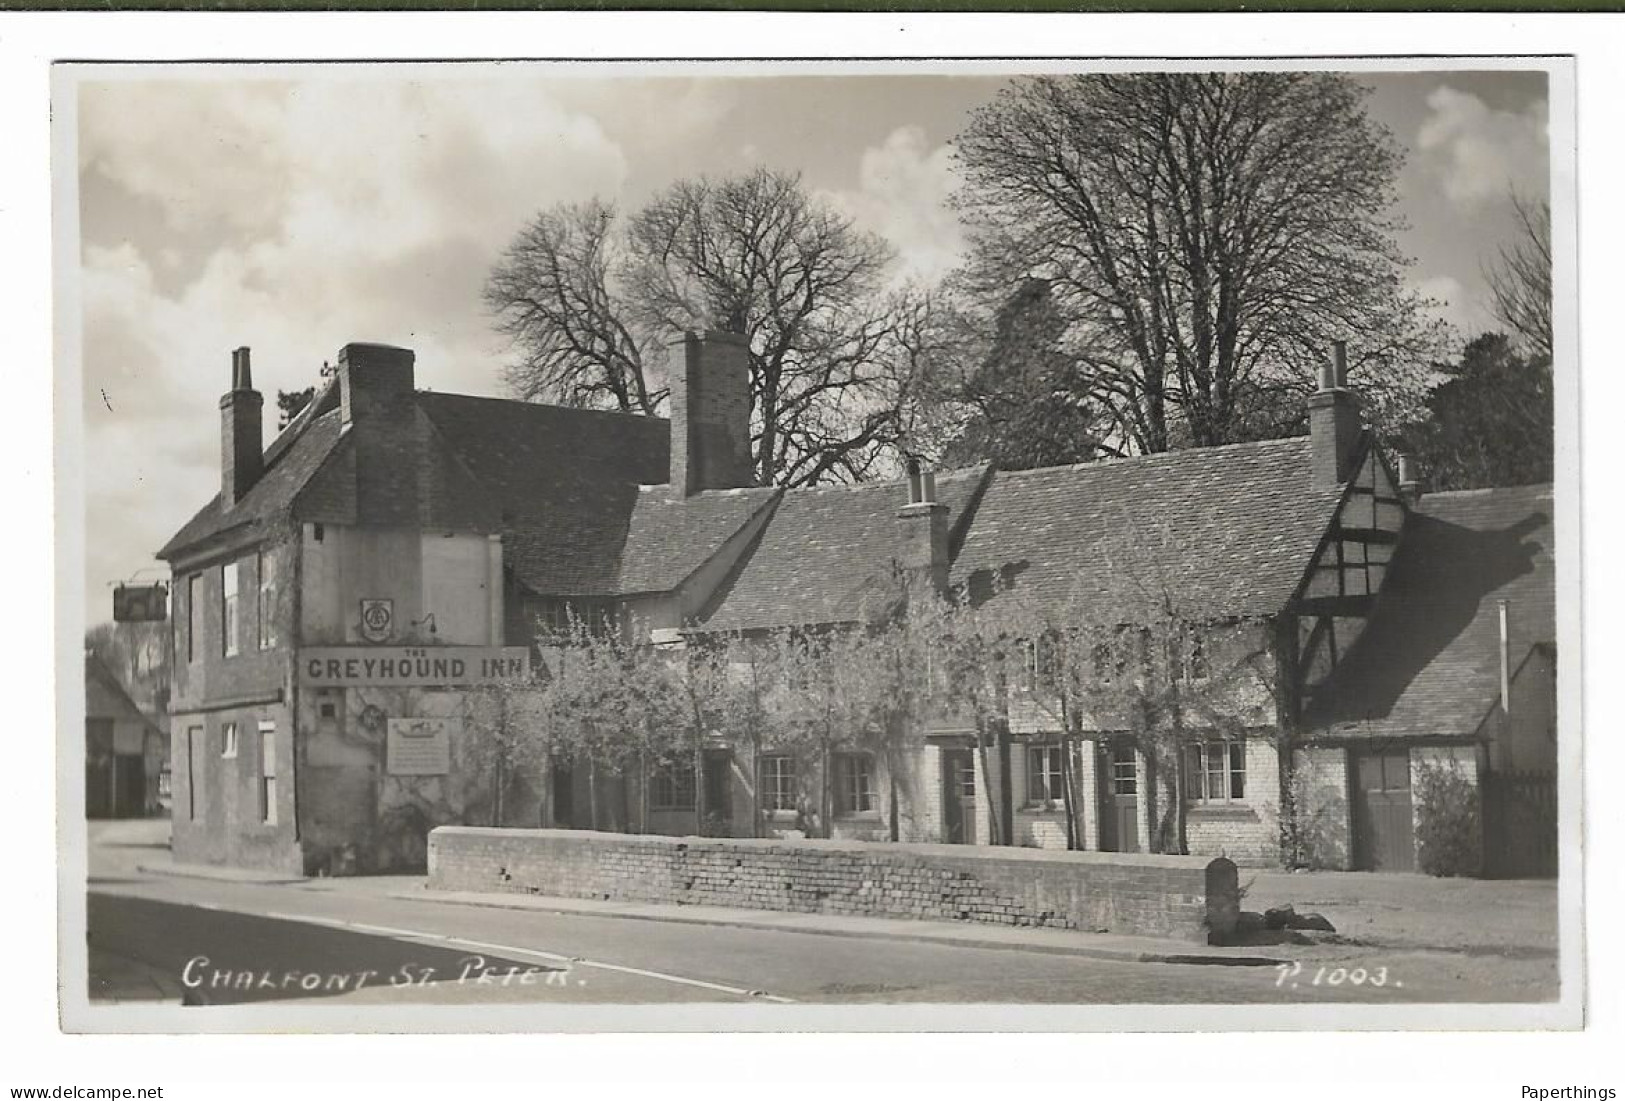 Real Photo Postcard, Buckinghamshire, Chalfont ST. Peter, The Greyhound Inn, Pub, Road, Street, House. - Buckinghamshire